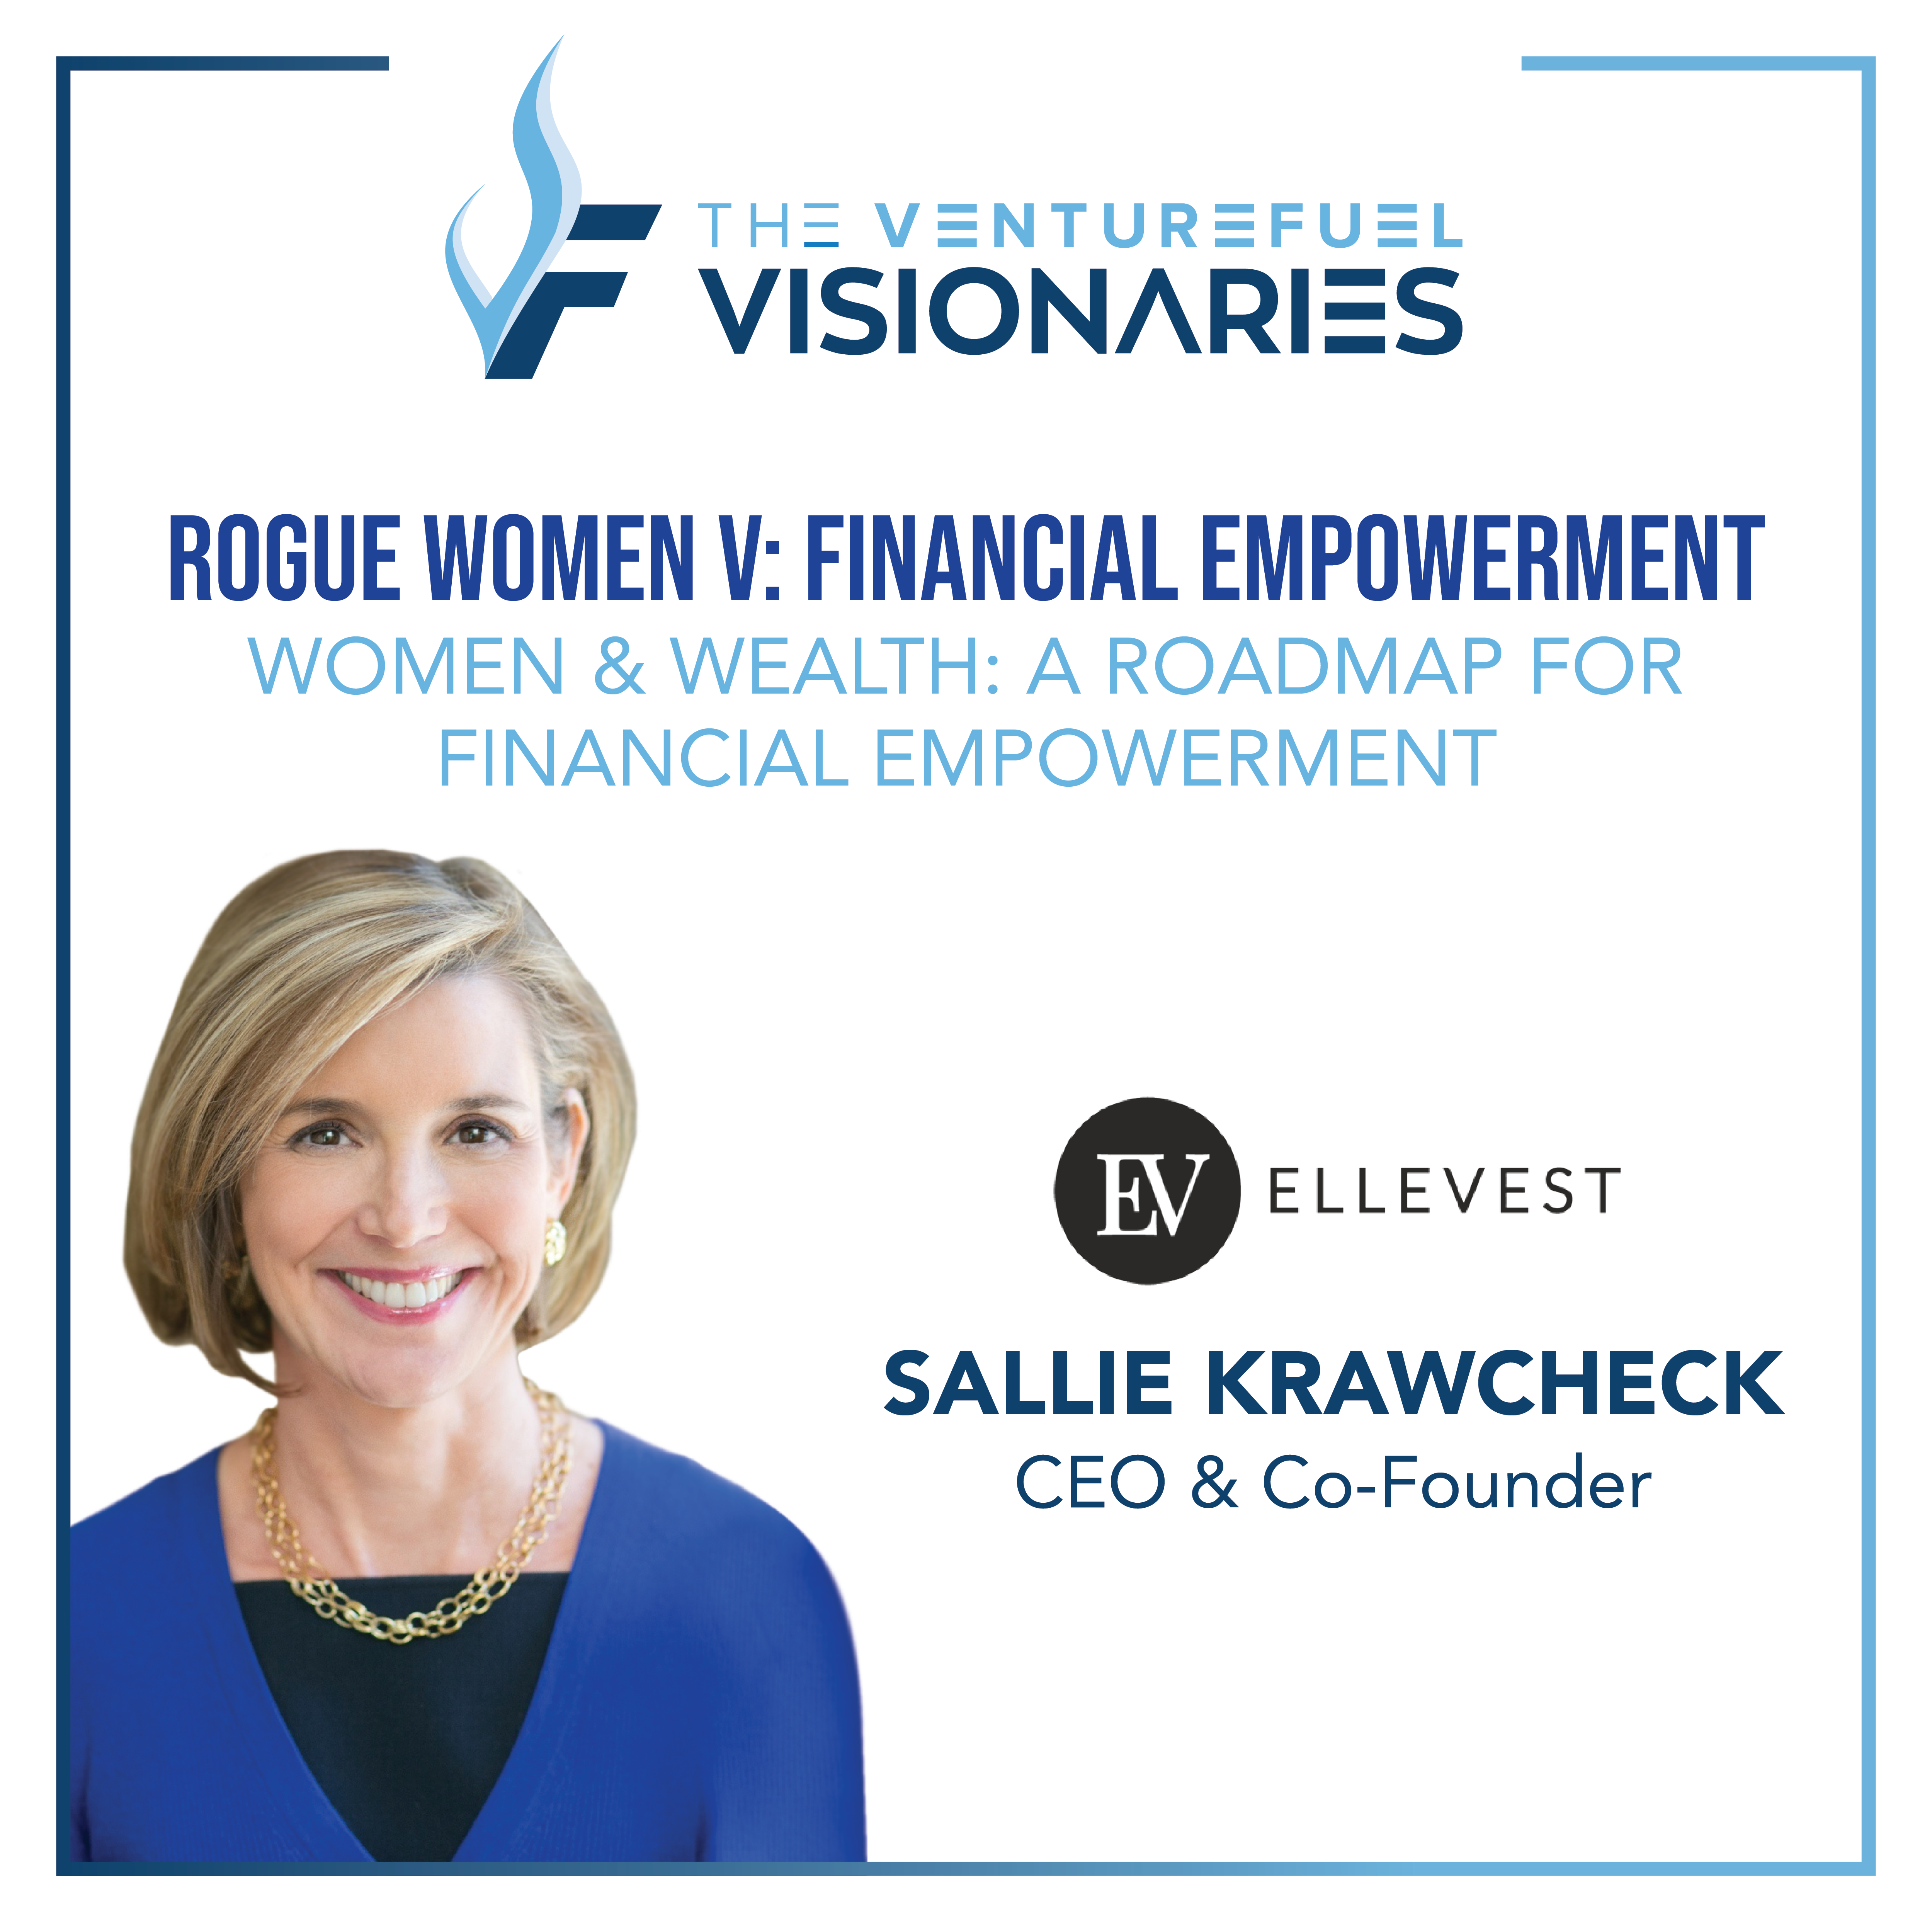 Women _ Wealth - A Roadmap for Financial Empowerment